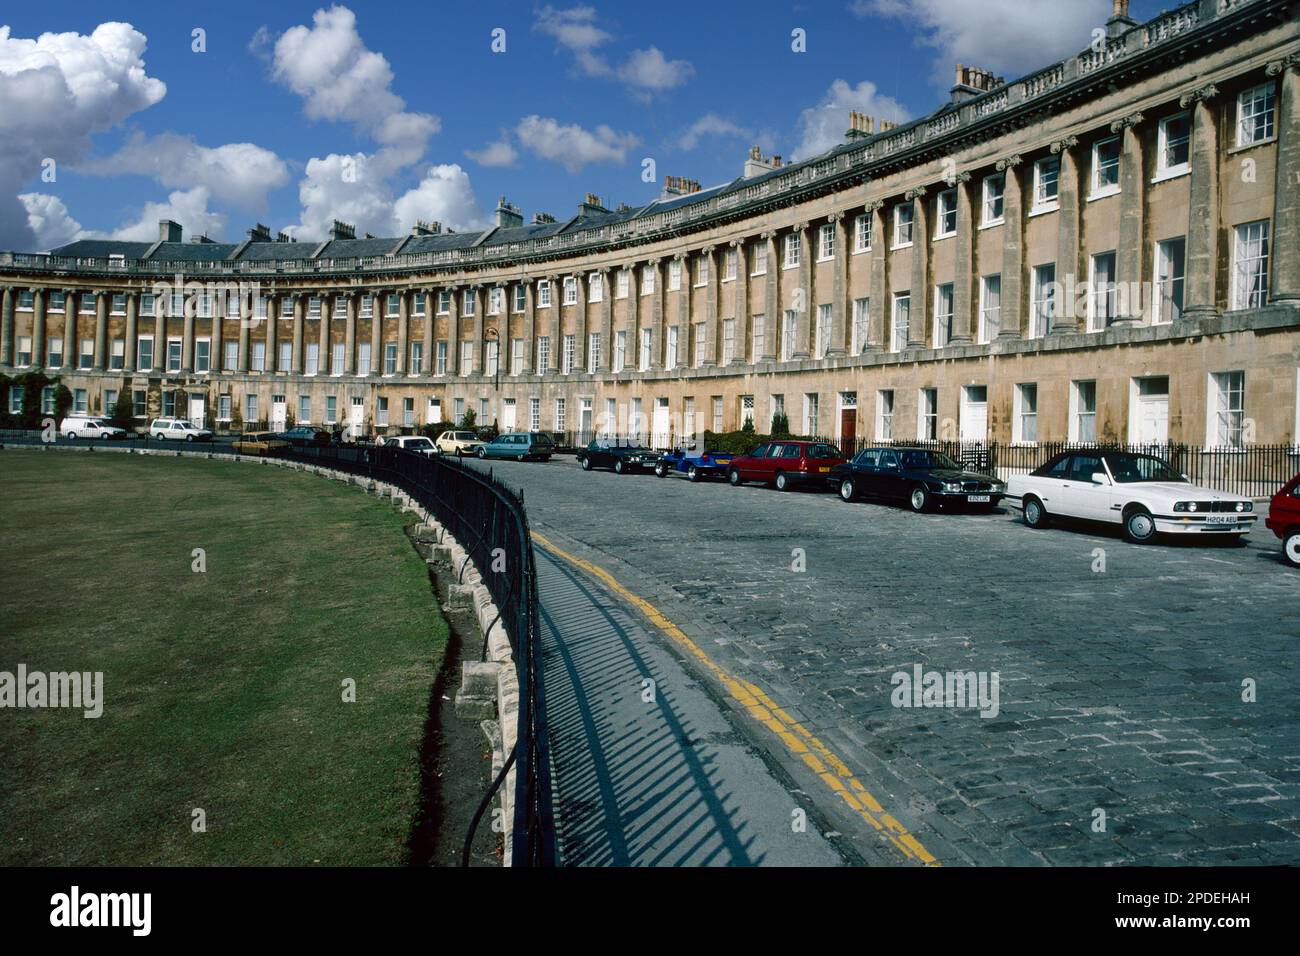 Die Royal Crescent, Bath, England Stockfoto